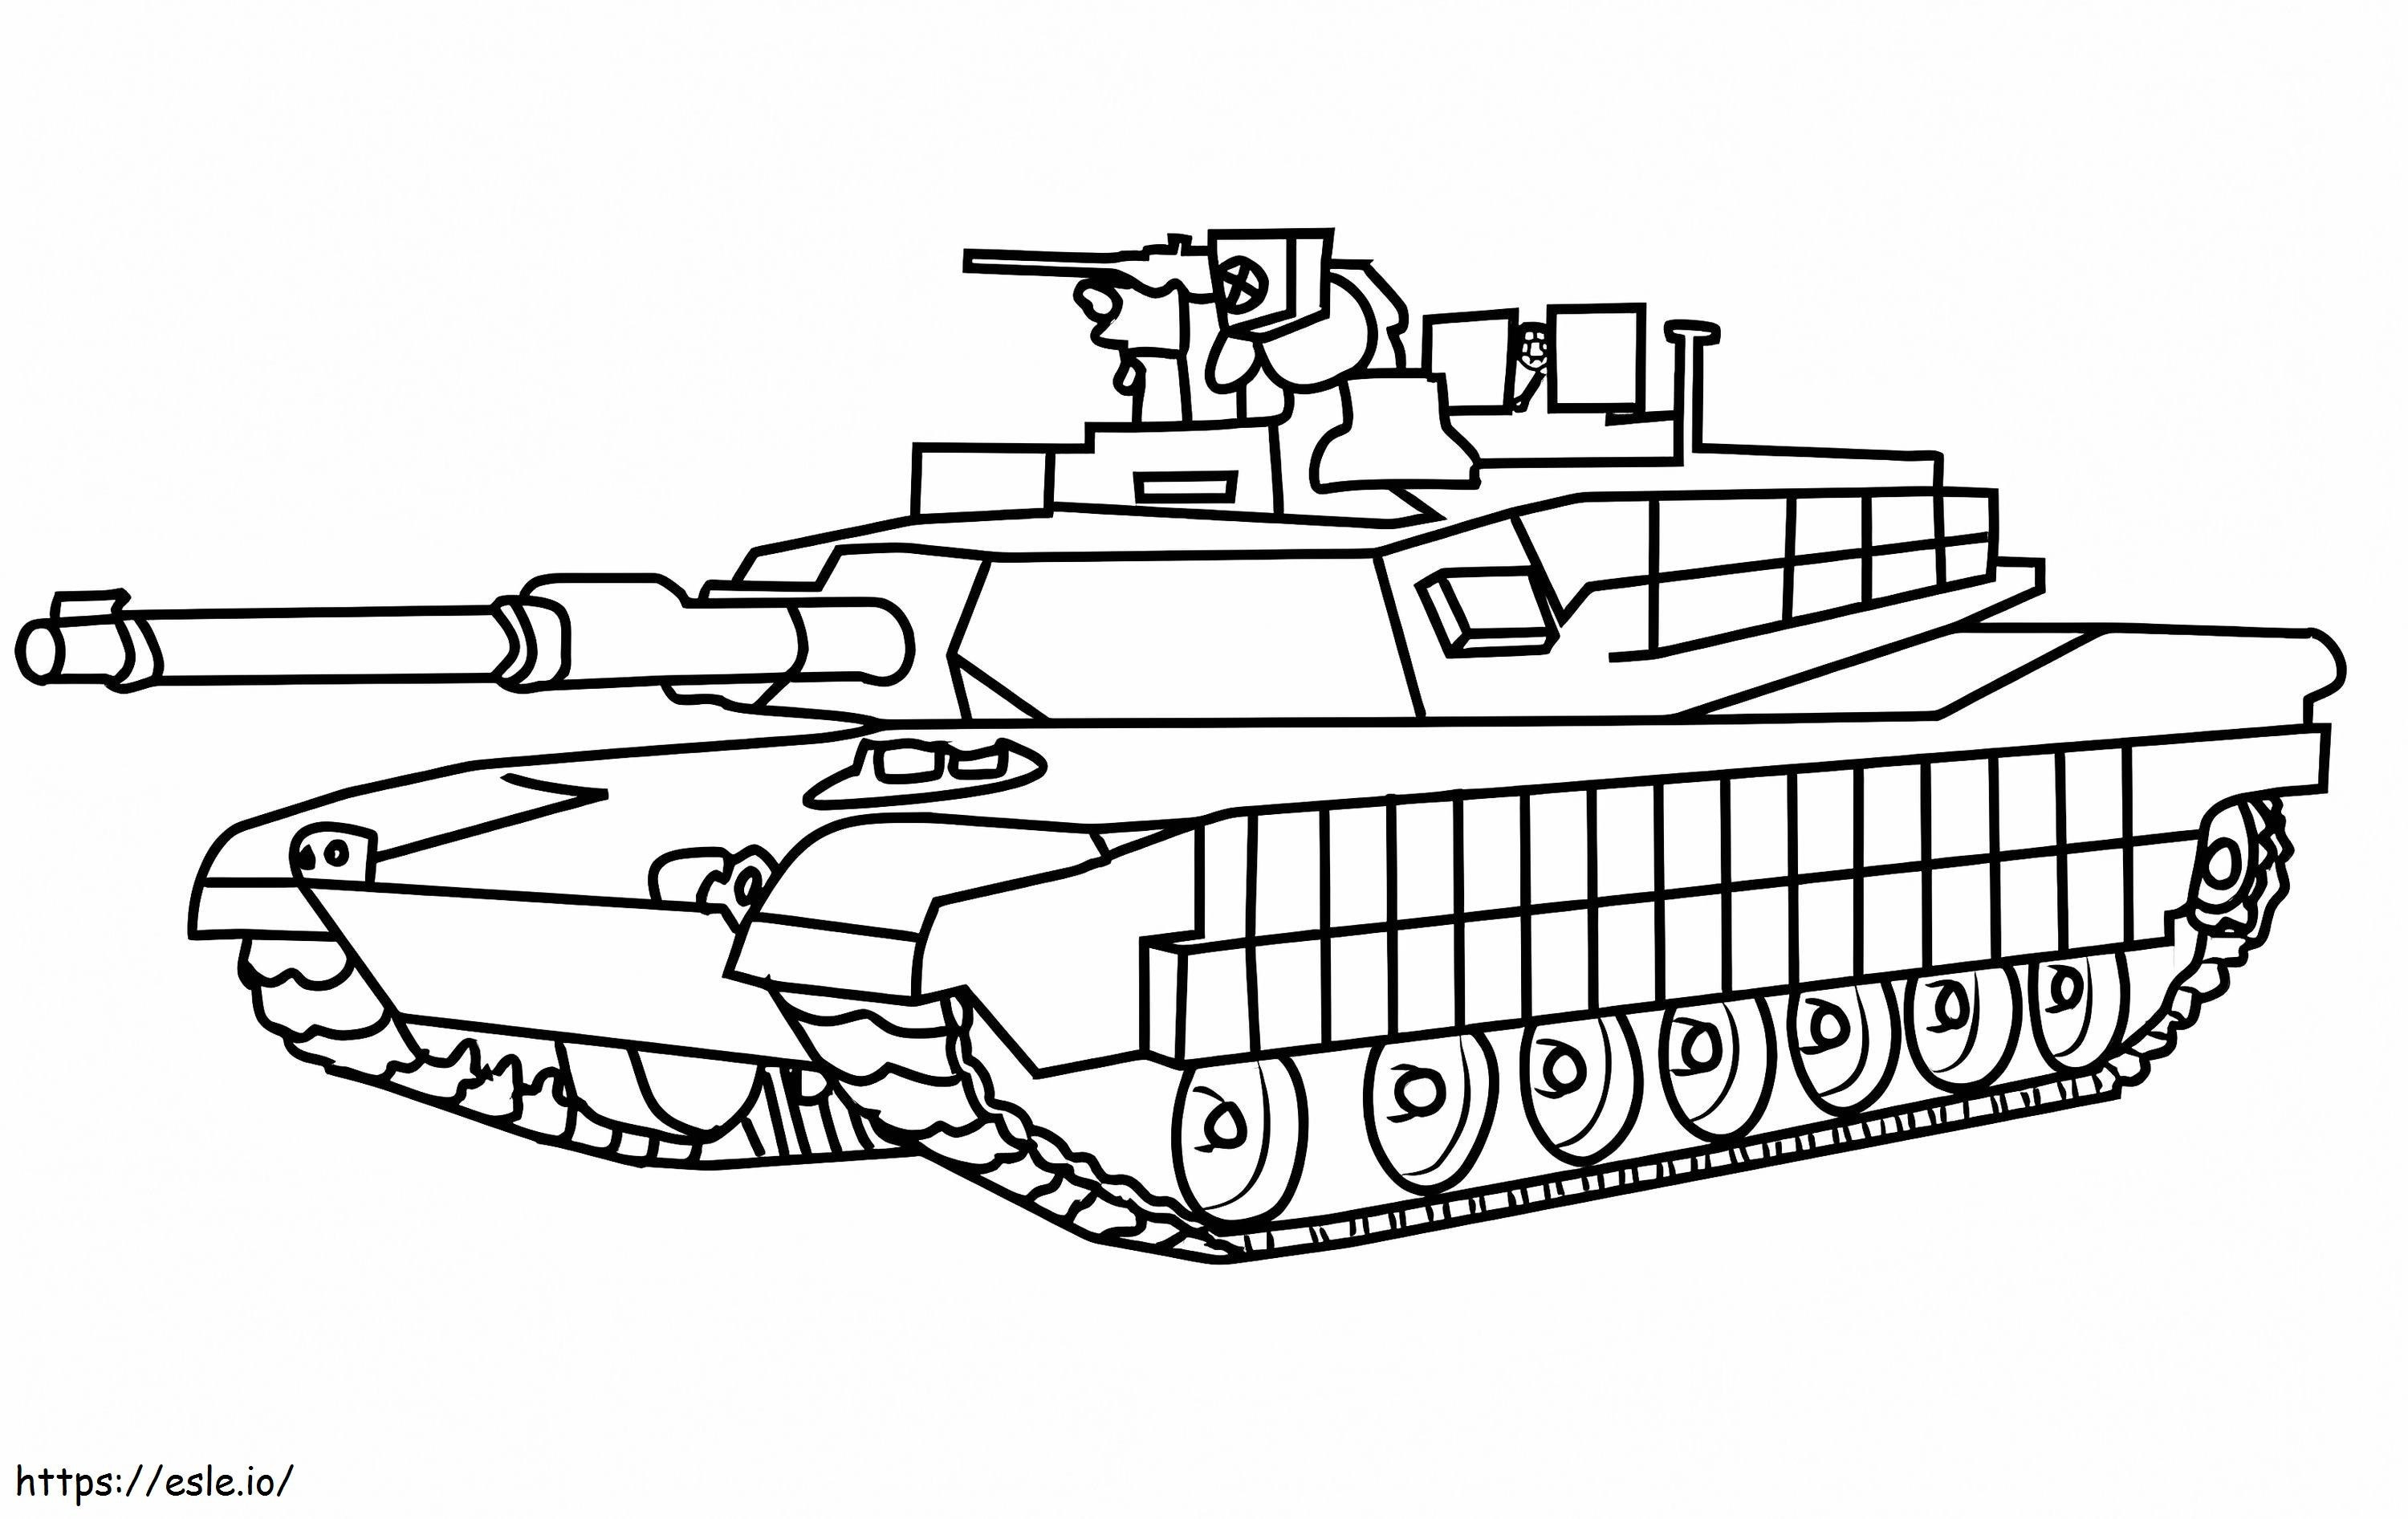 Tancul armatei M1 Abrams de colorat